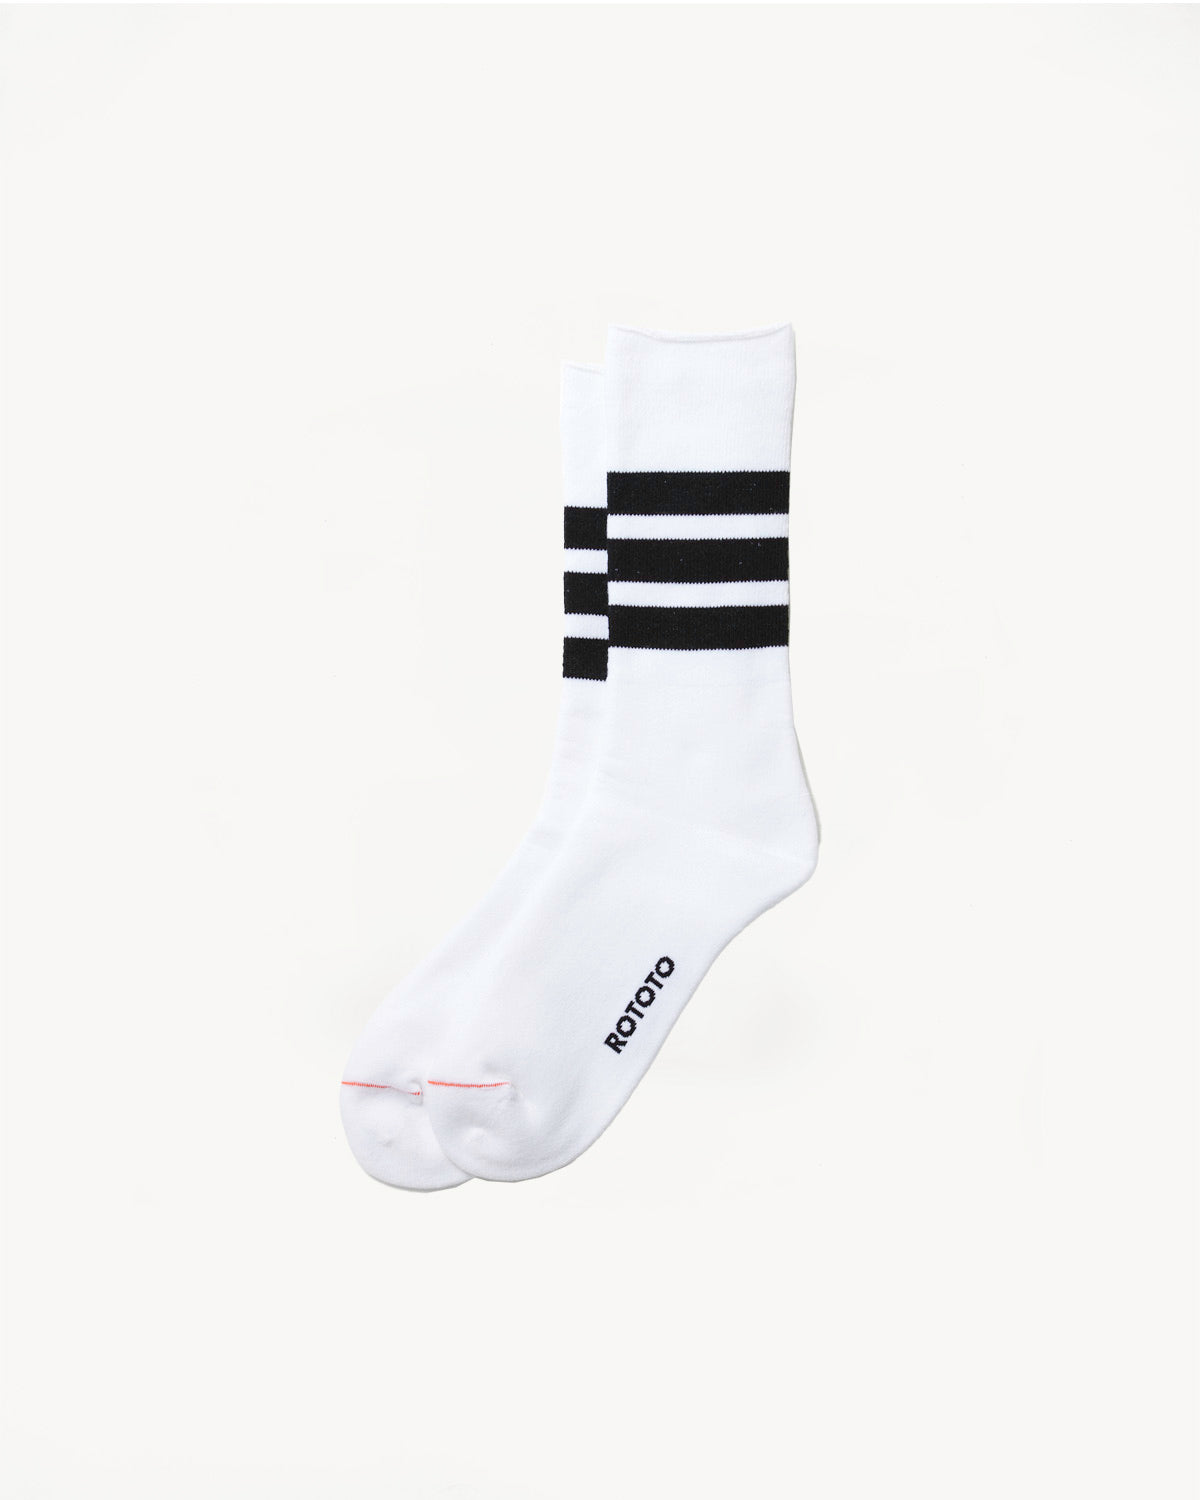 R1399 - Fine Pile Striped Crew Socks - White, Black